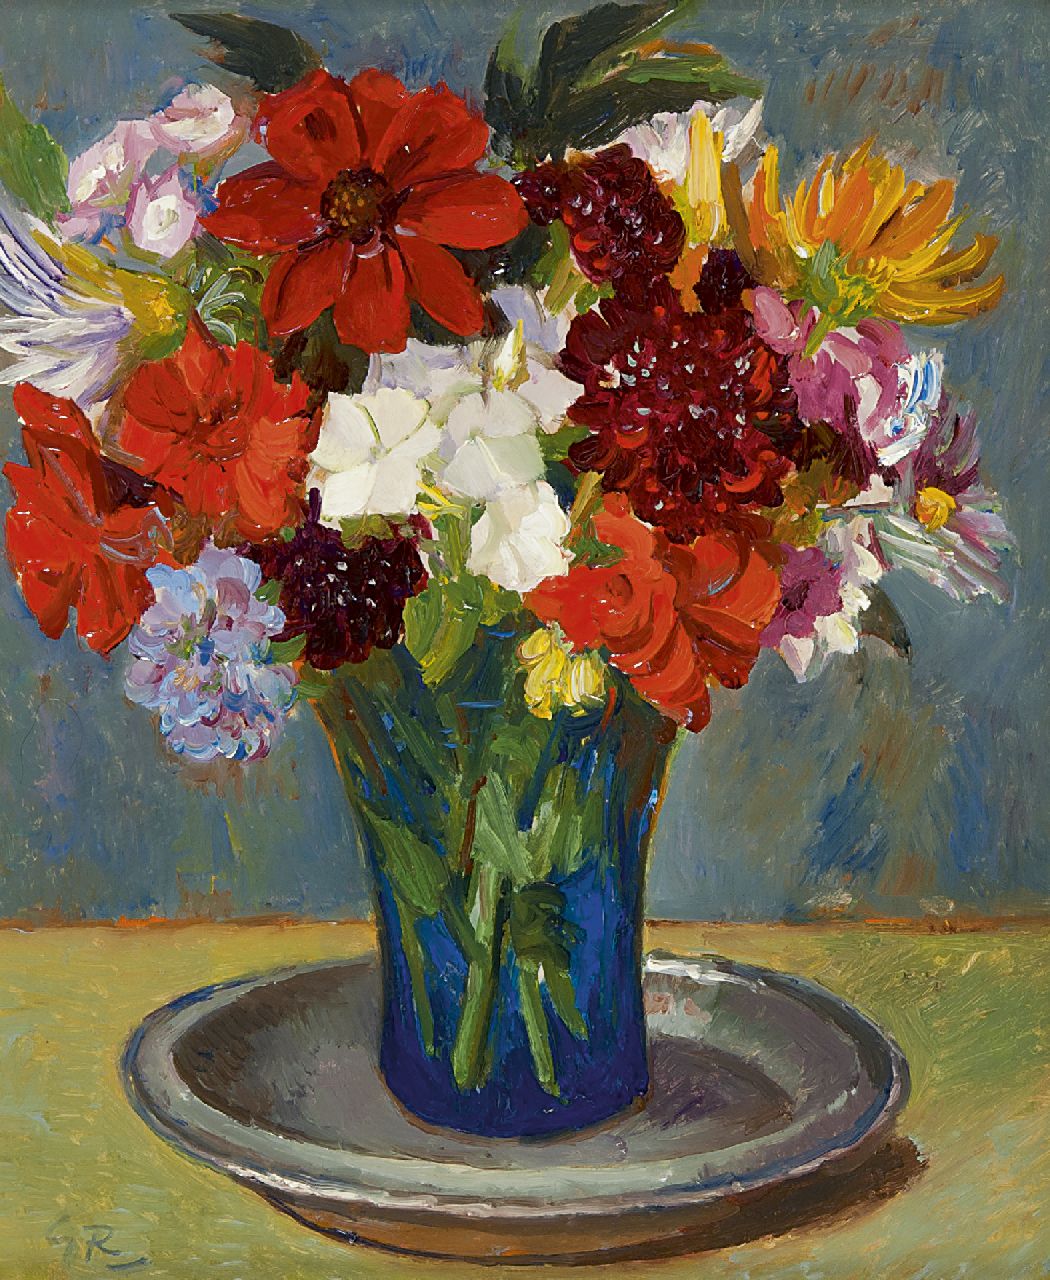 Röling G.V.A.  | Gerard Victor Alphons Röling, Glas met bloemen, olieverf op board 30,3 x 25,3 cm, gesigneerd linksonder met initialen en verso voluit